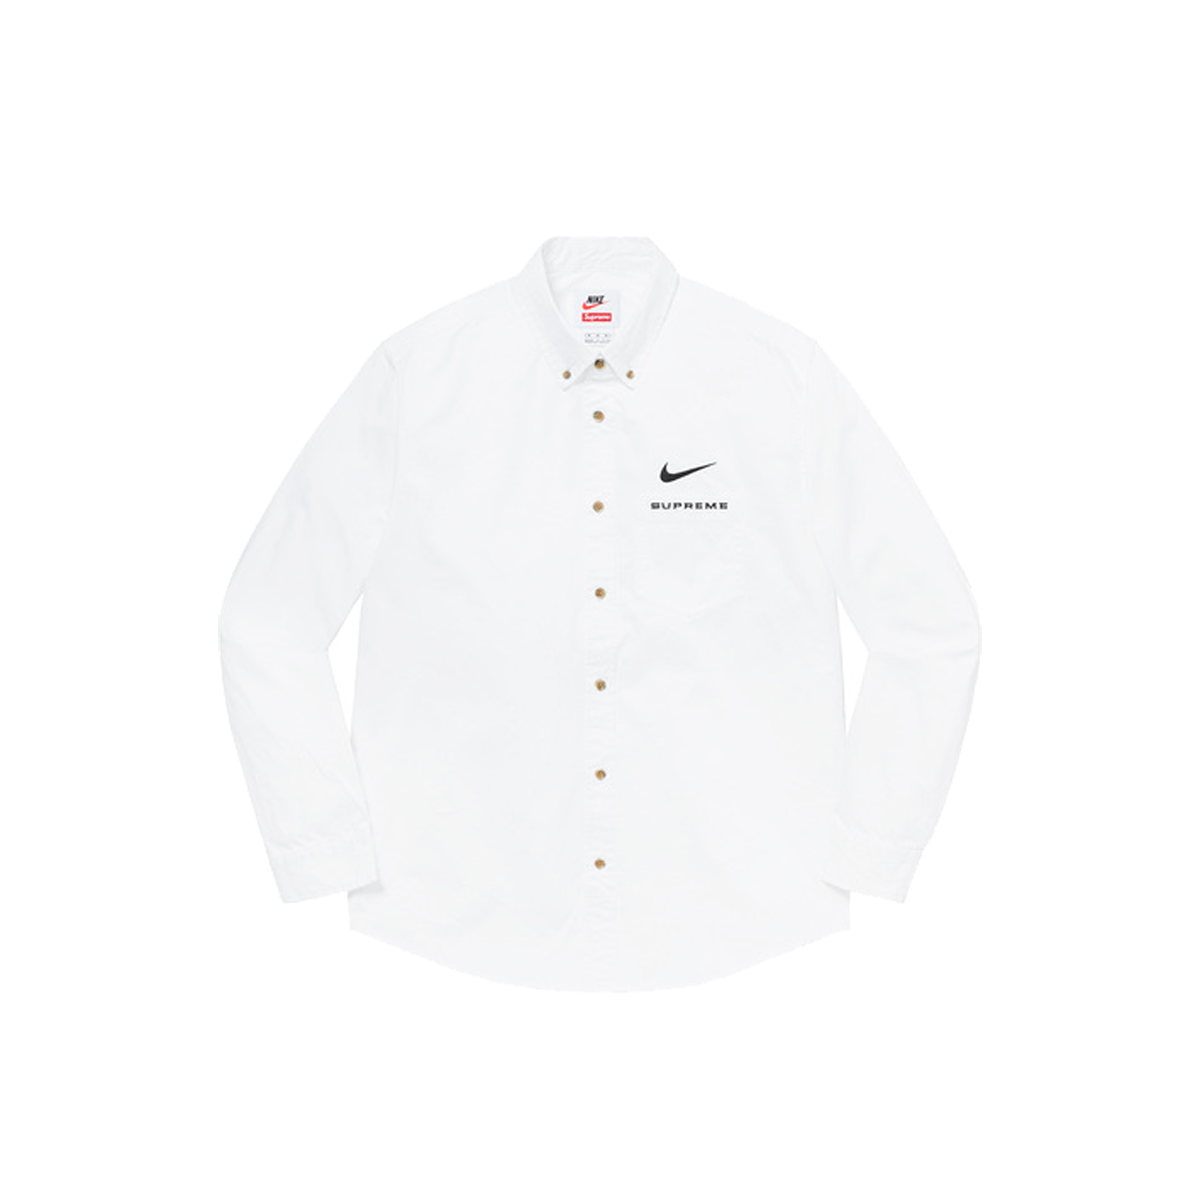 Supreme®/Nike® Cotton Twill Shirt ホワイト